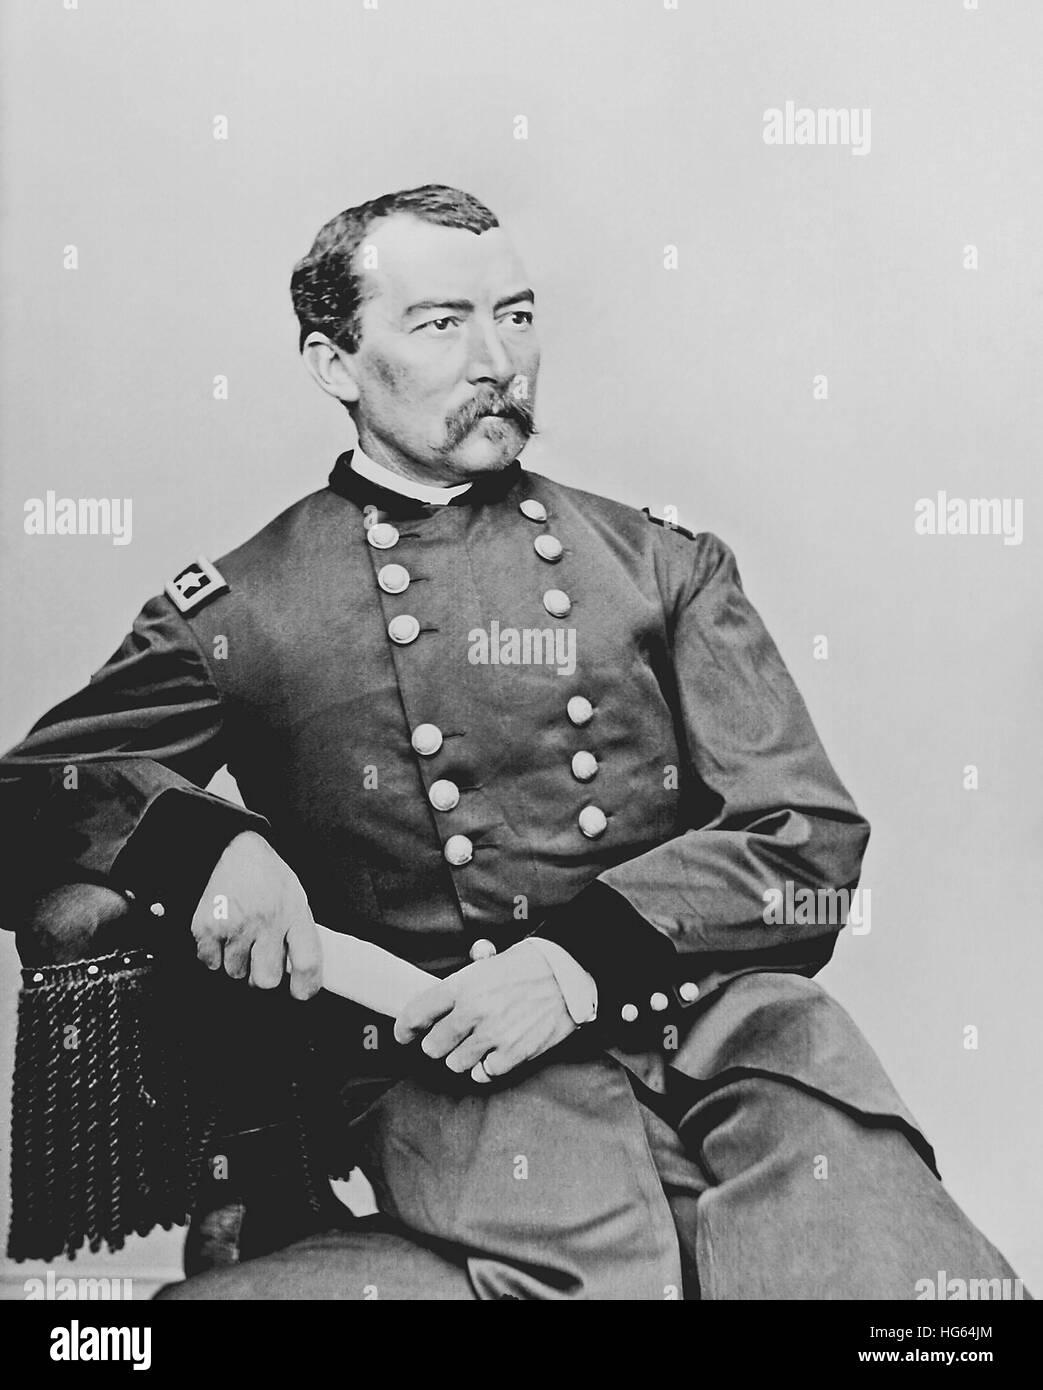 Vintage American Civil War Foto der Union Army General Philip Sheridan. Stockfoto